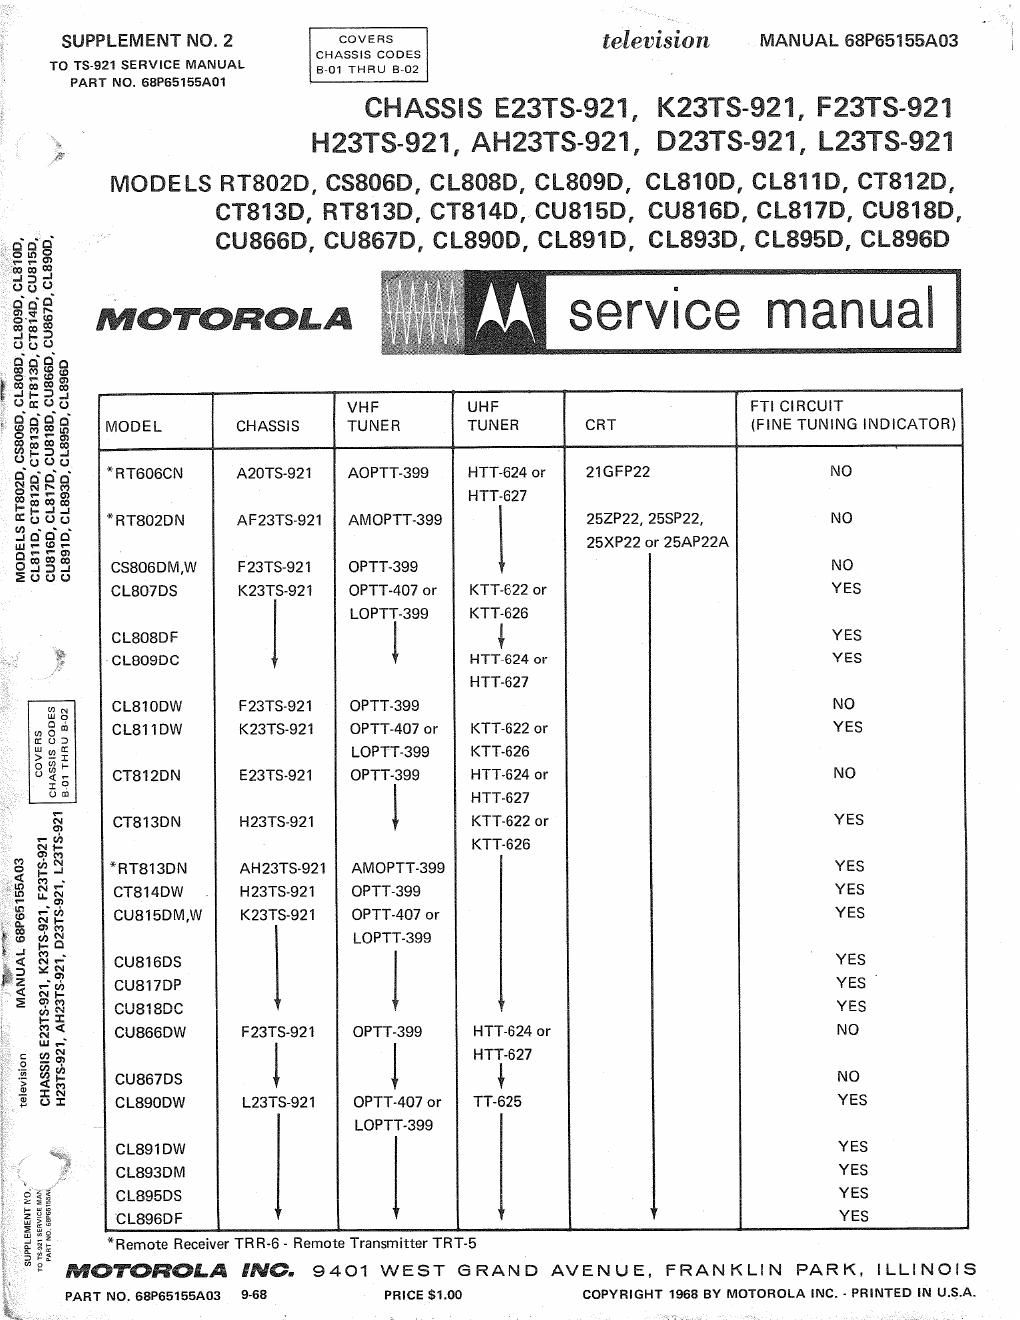 motorola cl 811 d service manual